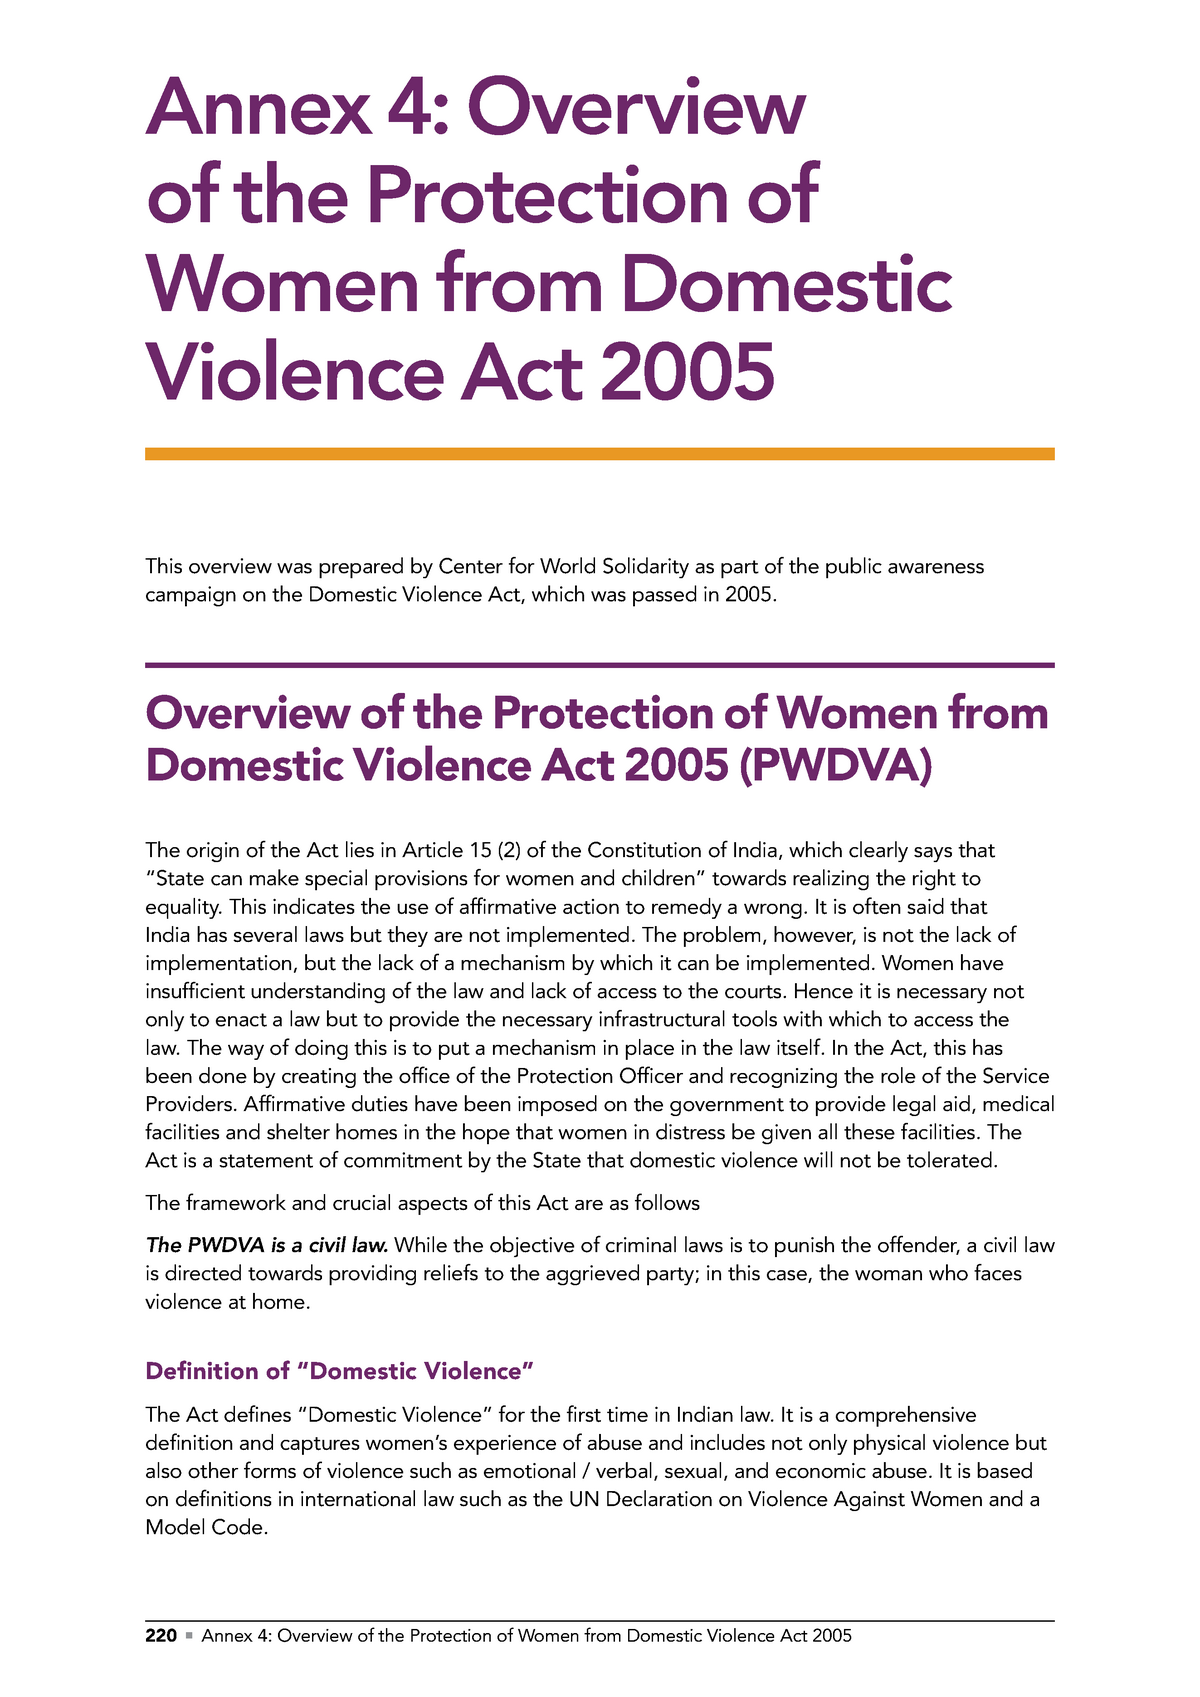 domestic violence act 2005 essay